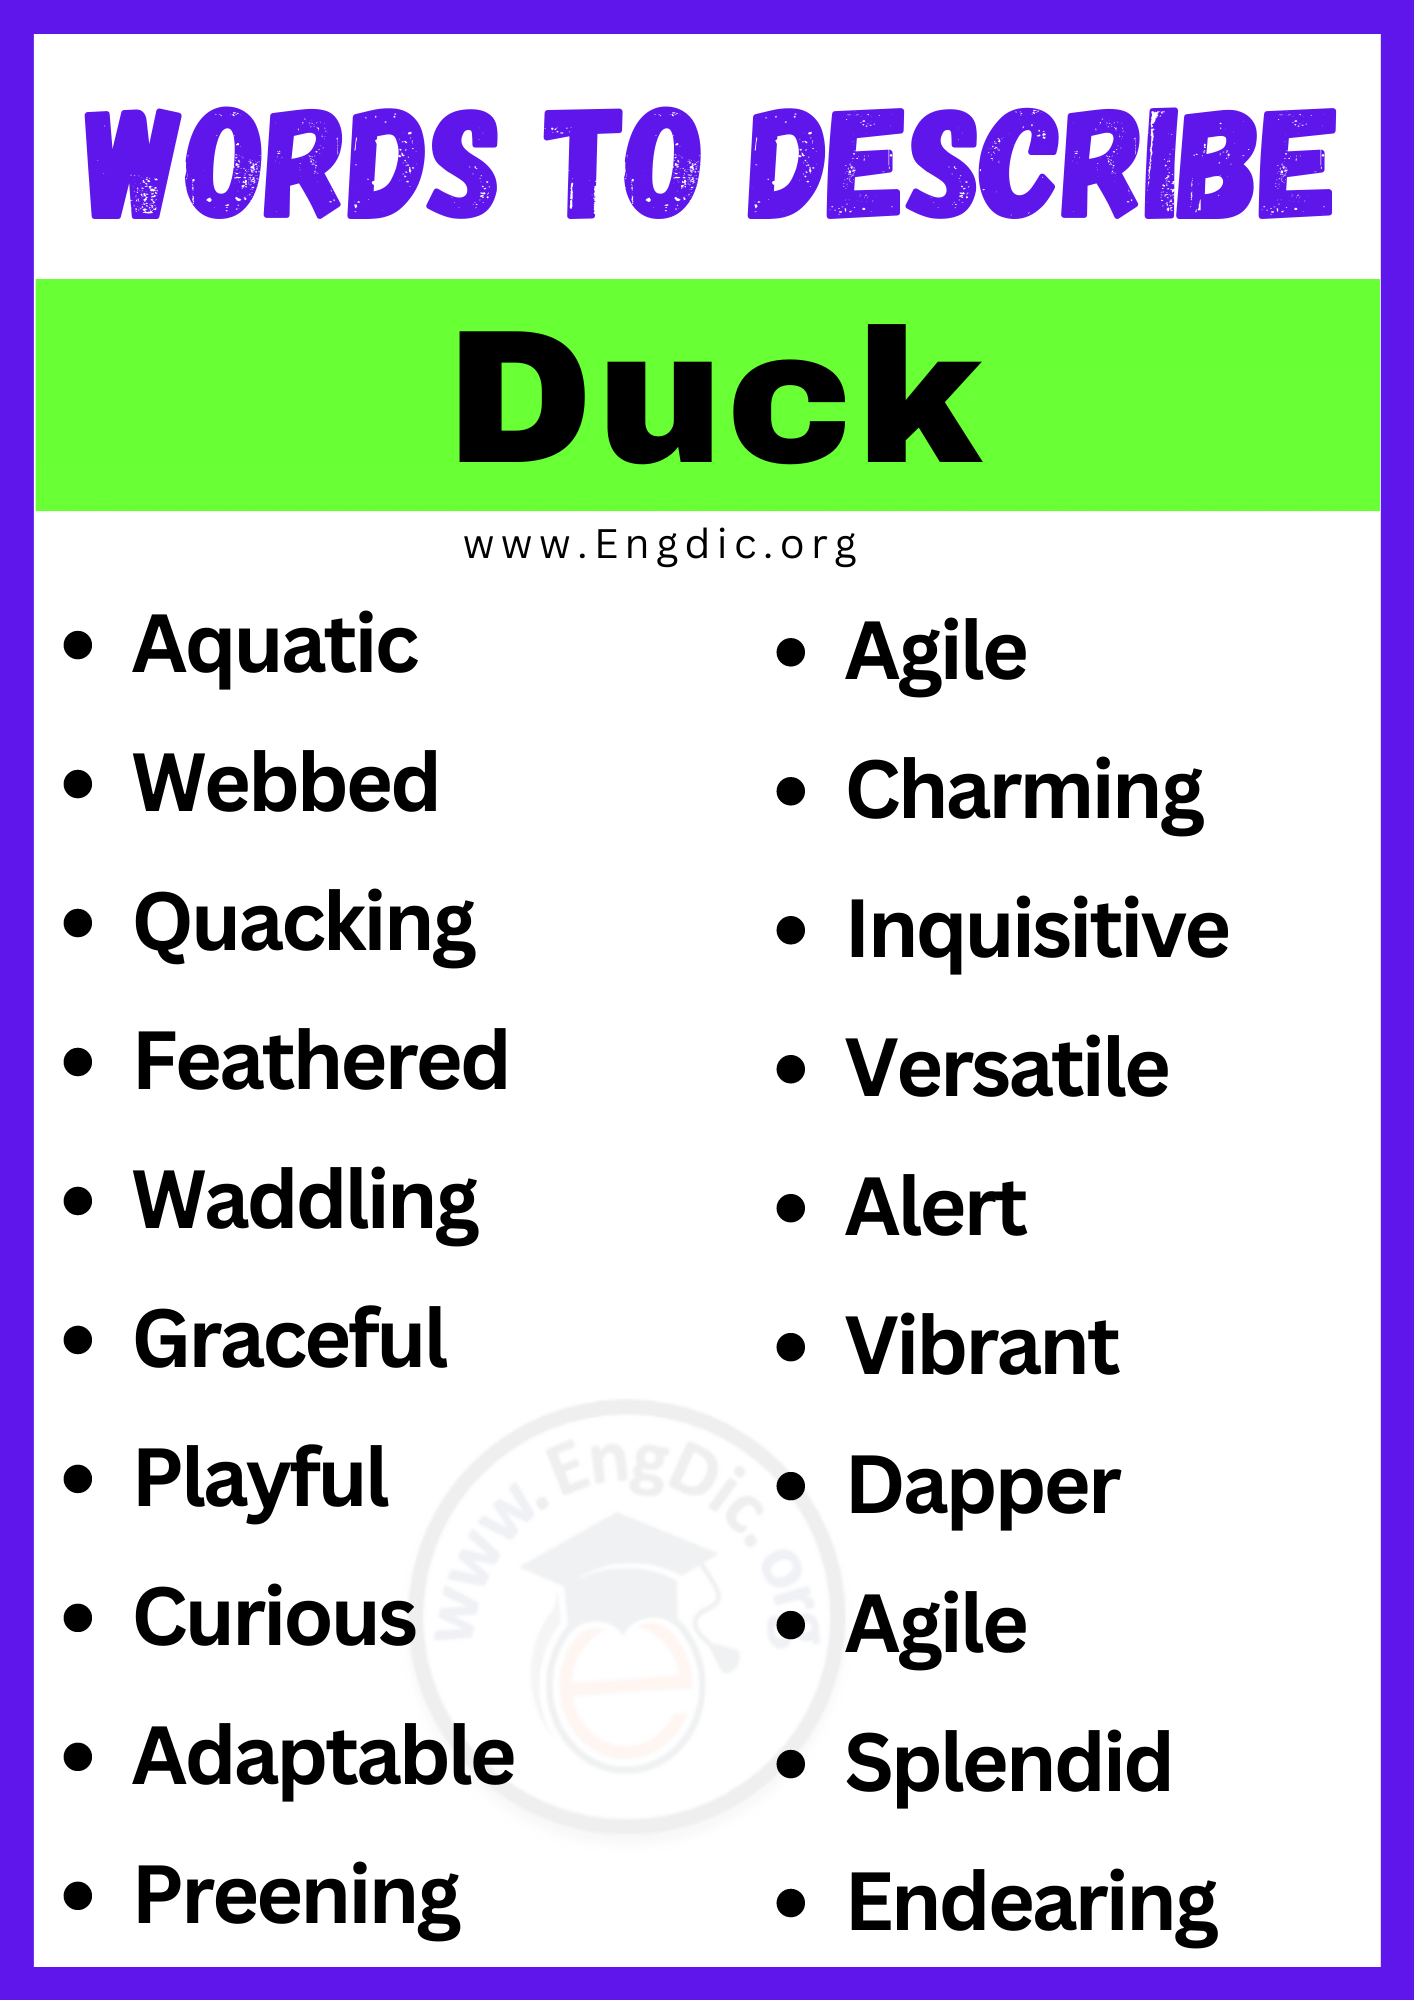 Words to Describe Duck